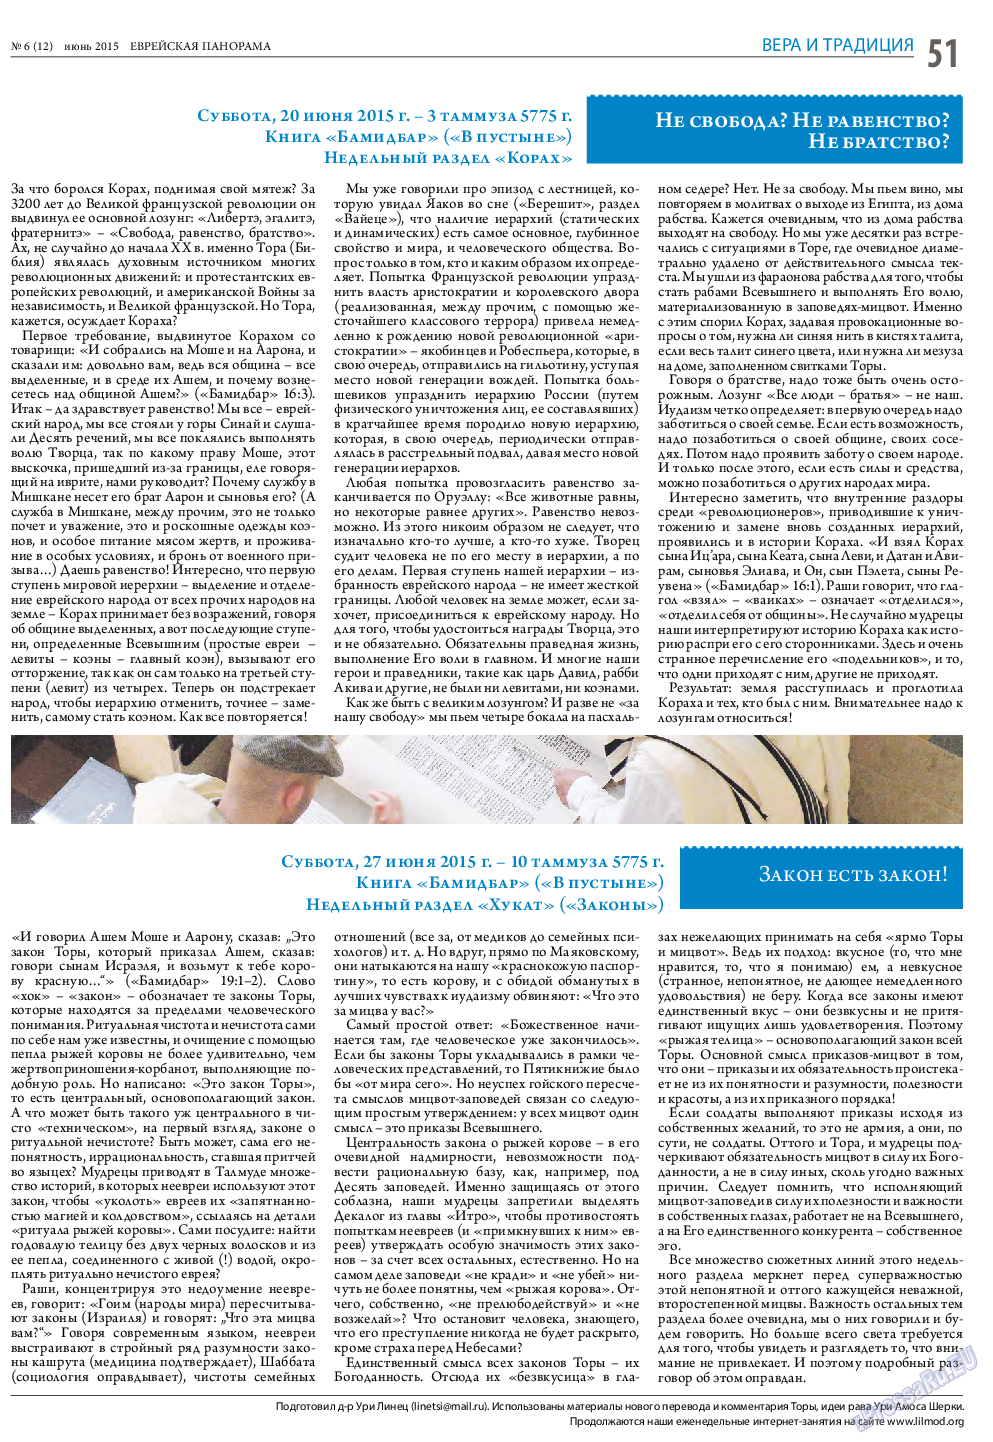 Еврейская панорама, газета. 2015 №6 стр.51